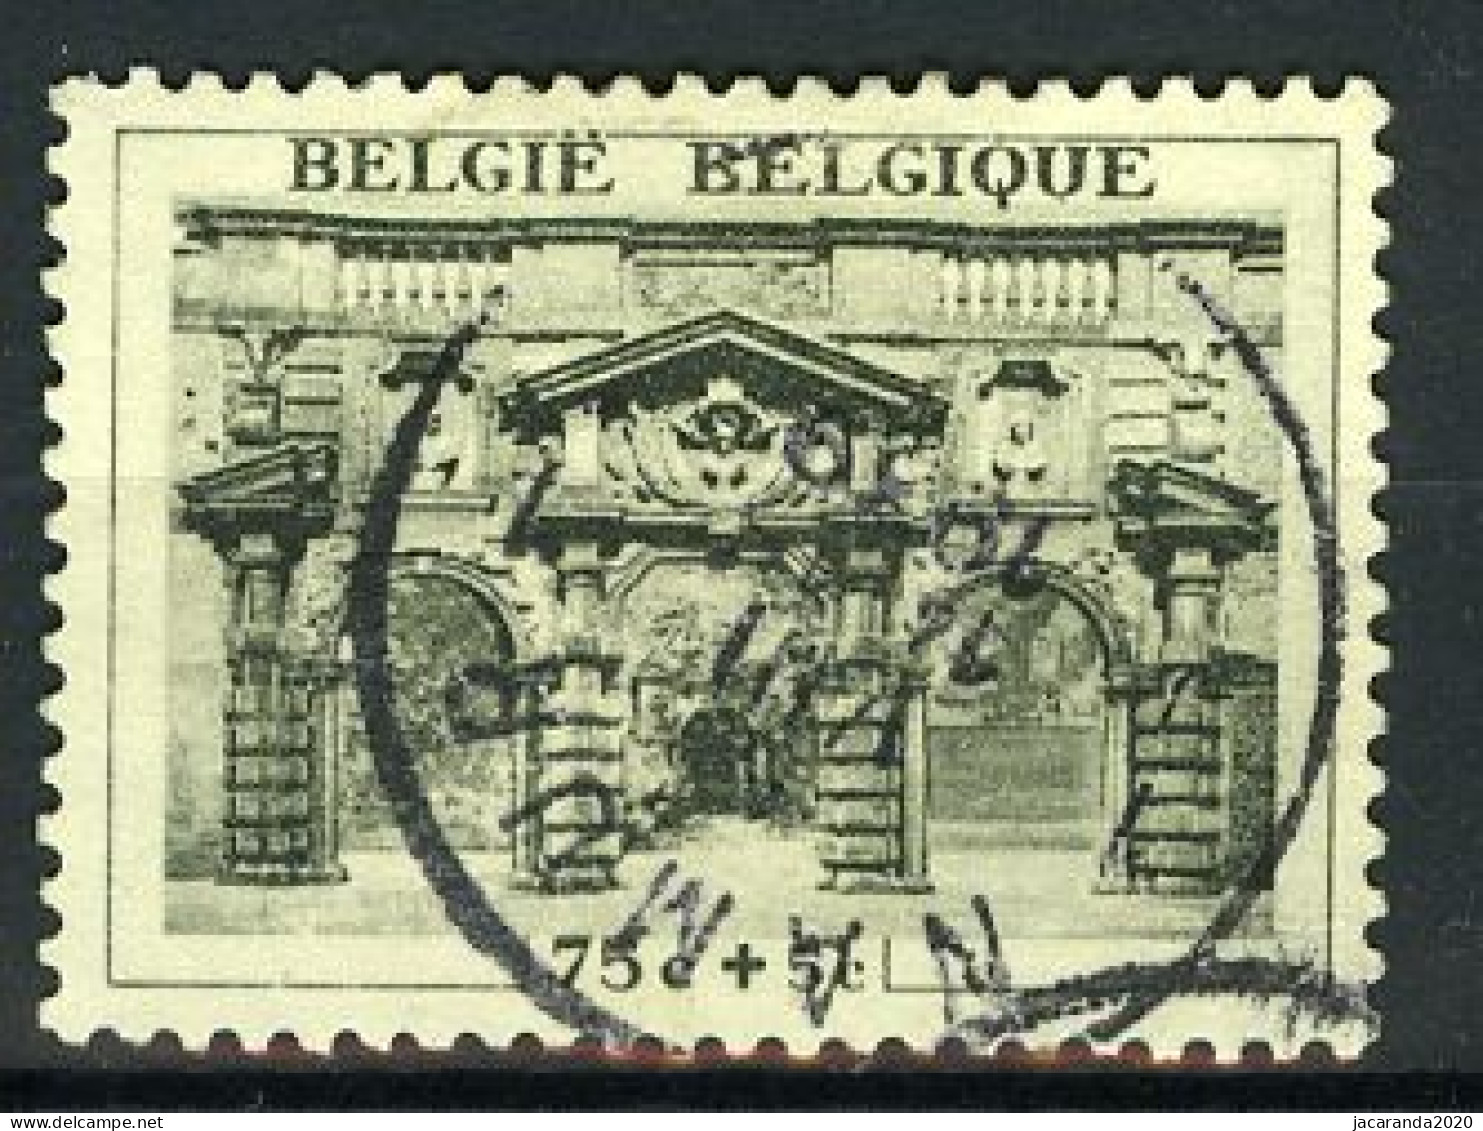 België 506 - Rubenshuis - Antwerpen - Paviljoen Van Hercules - Gestempeld - Oblitéré - Used - Gebraucht